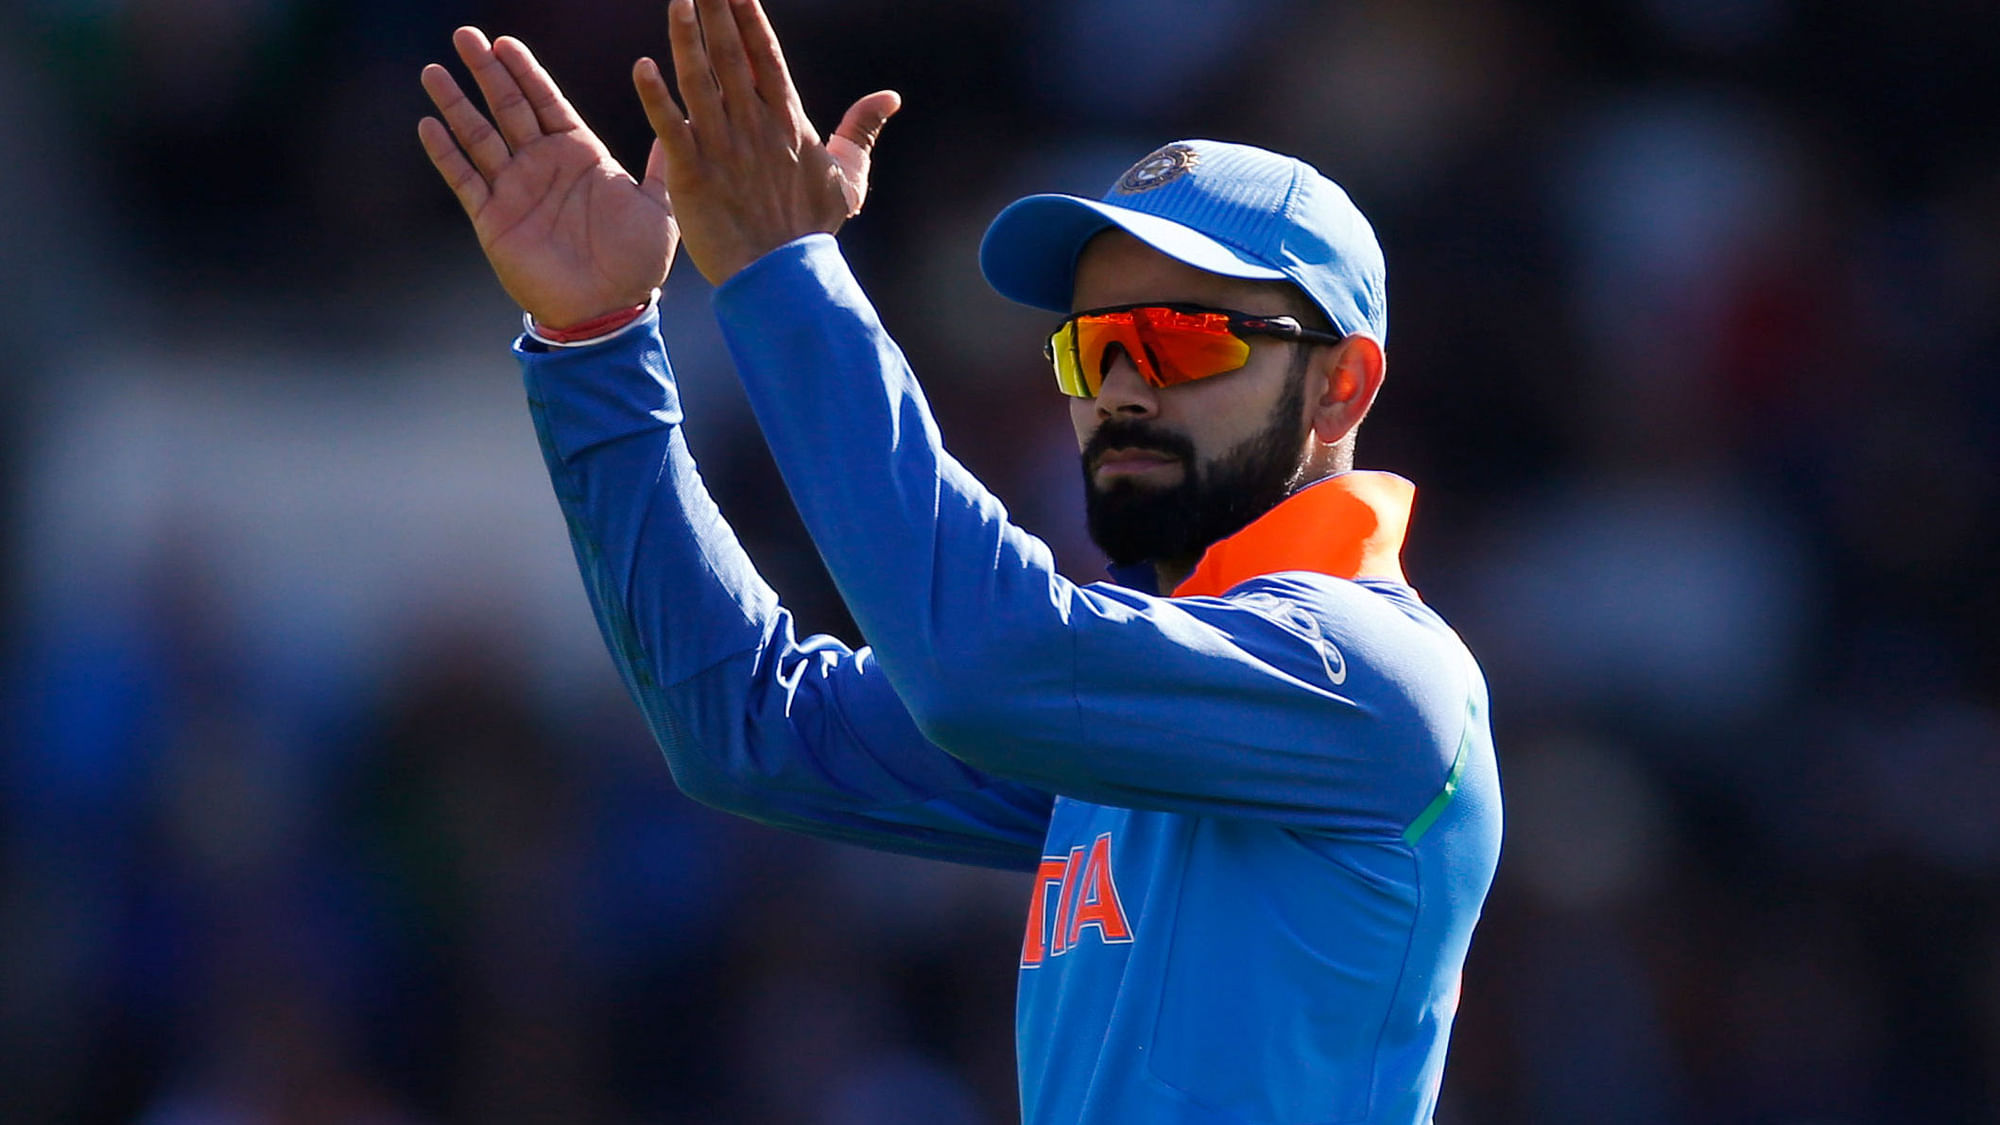 Virat Kohli gestures during the match between India and Pakistan on Sunday. (Photo: Reuters)